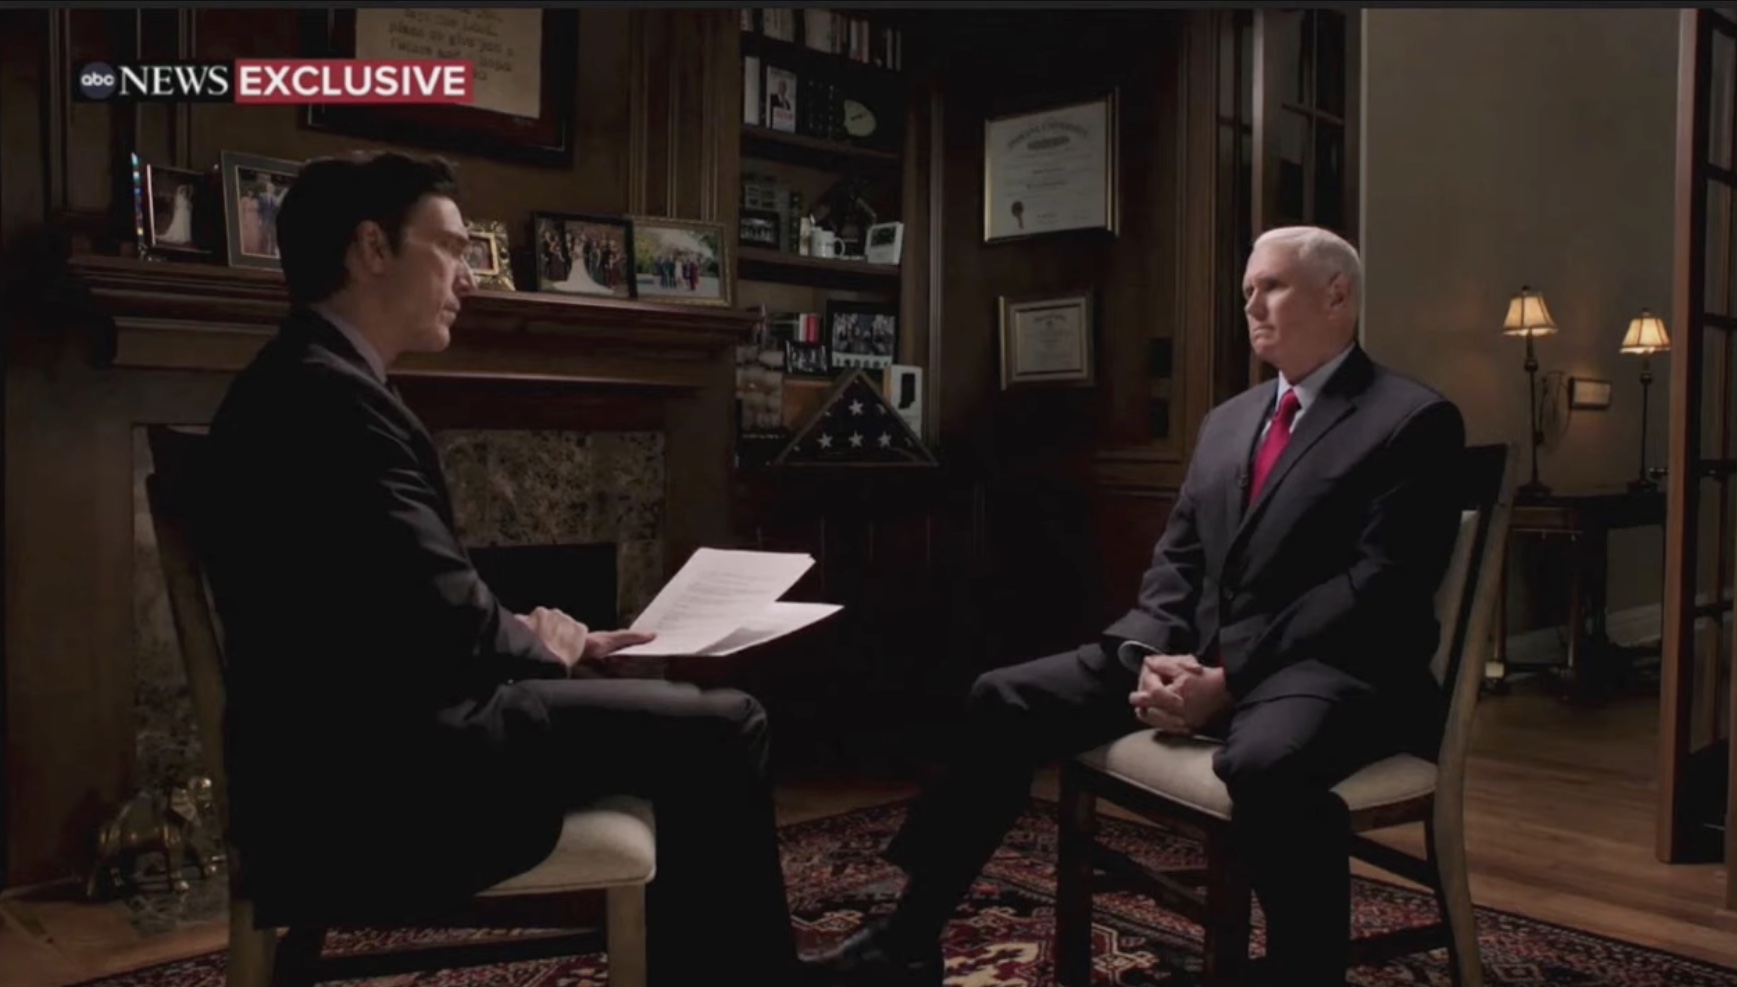 David Muir interviews Mike Pence